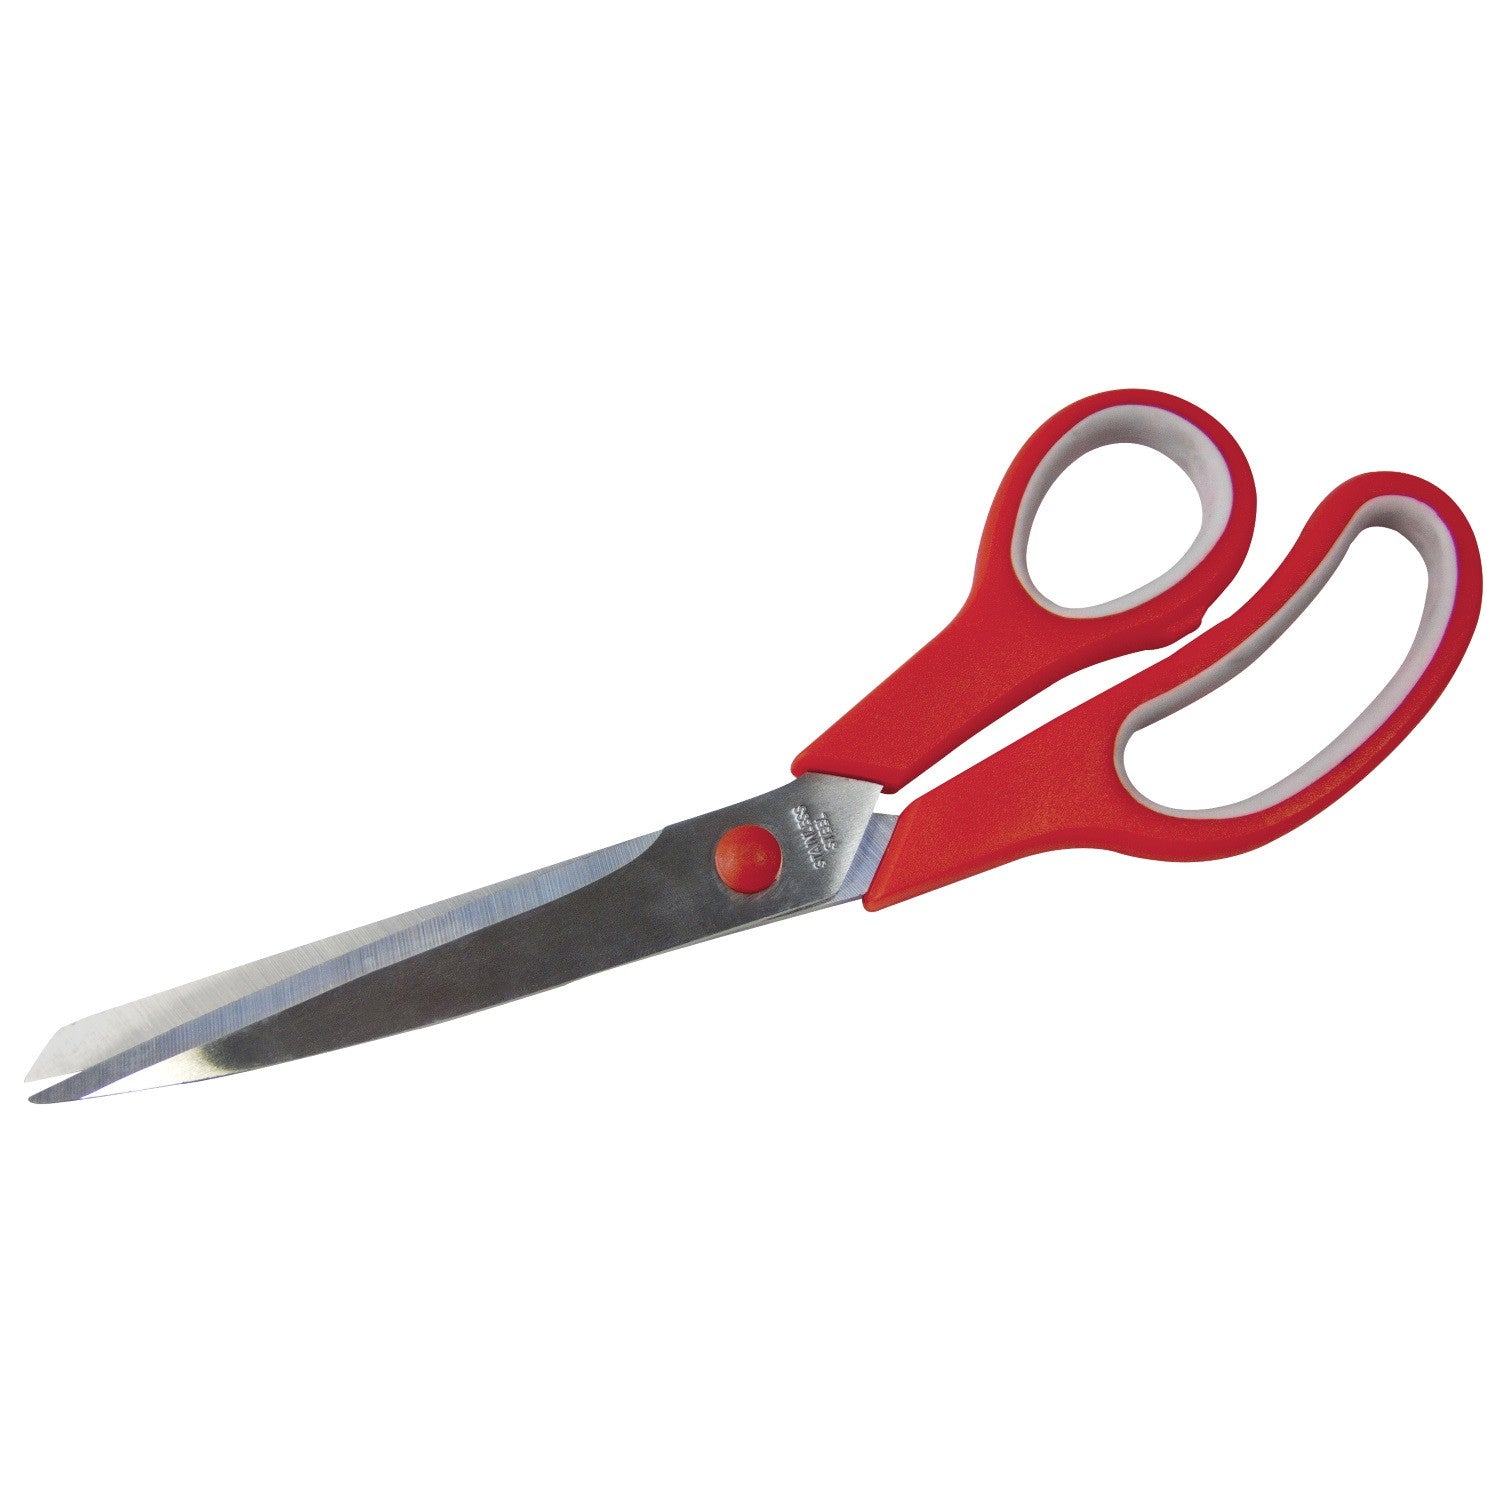 Amtech R0125 Wallpaper Scissors 10" (250mm) - Premium Scissors from DK Tools - Just $2.03! Shop now at W Hurst & Son (IW) Ltd